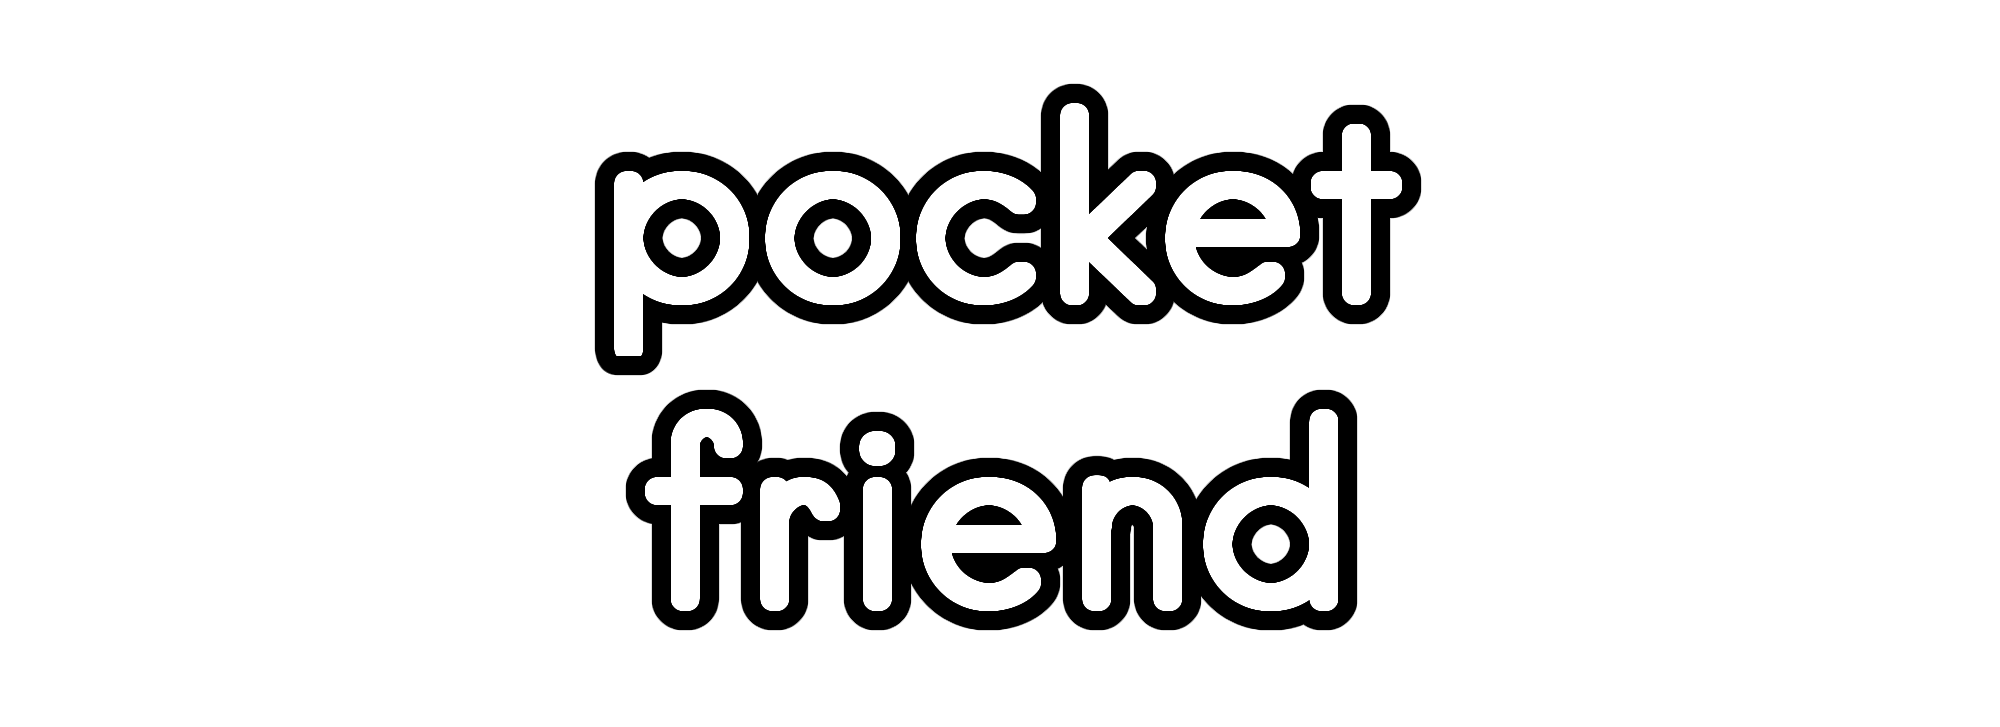 pocket friend